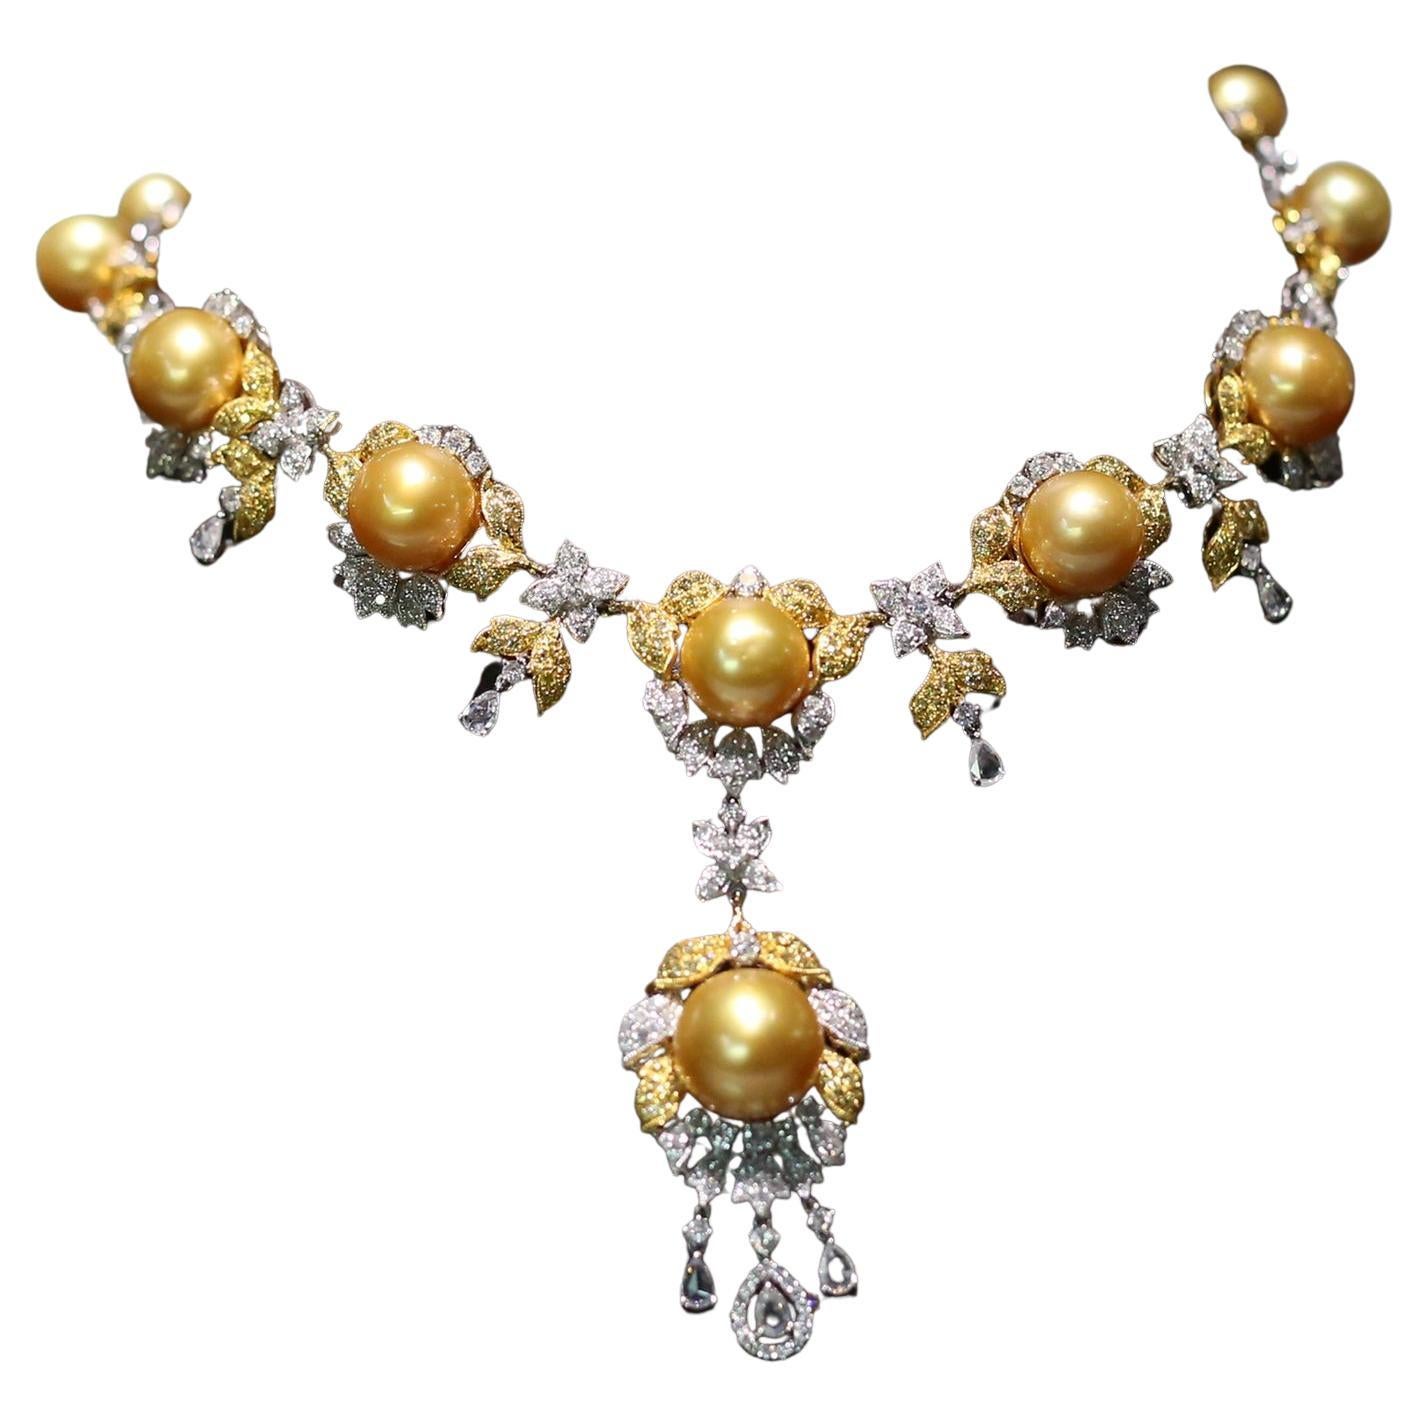 NWT $99,000 Wunderschöne 18KT Südsee-Gold Perle Fancy Gelbe Diamant-Halskette